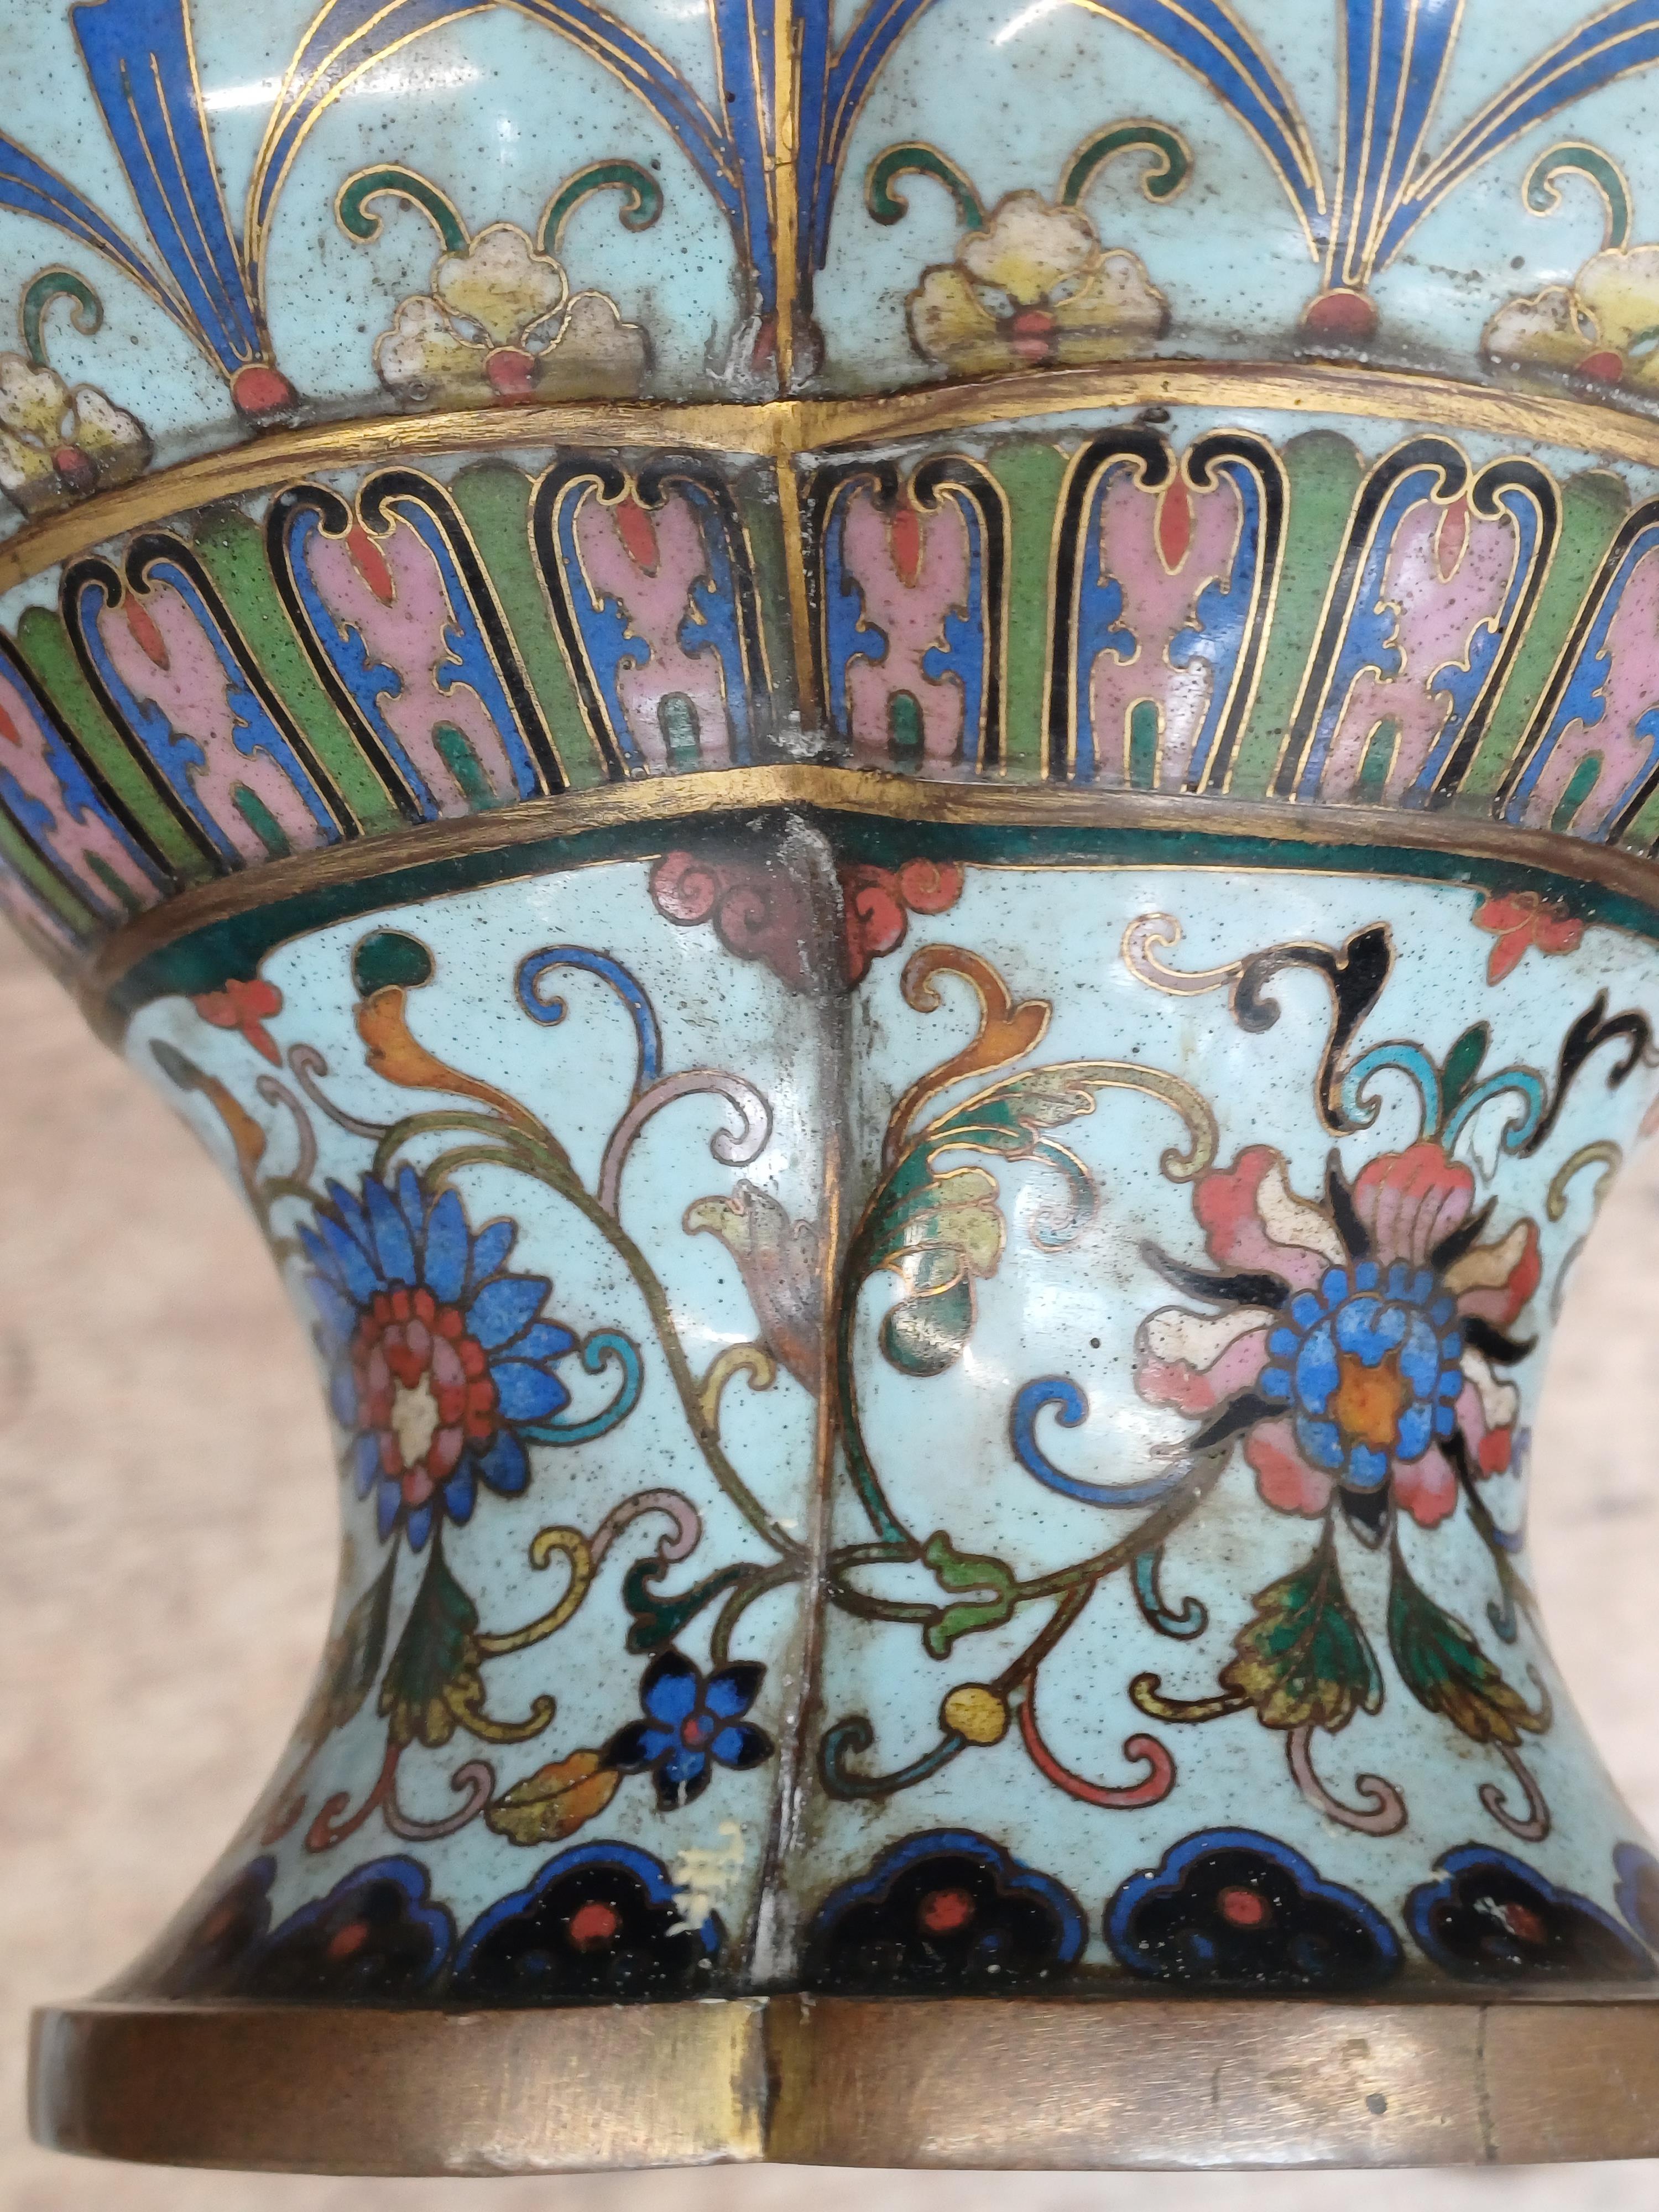 A PAIR OF CHINESE CLOISONNÉ ENAMEL VASES 清十八世紀 銅胎掐絲琺瑯番蓮紋瓶一對 - Image 11 of 17